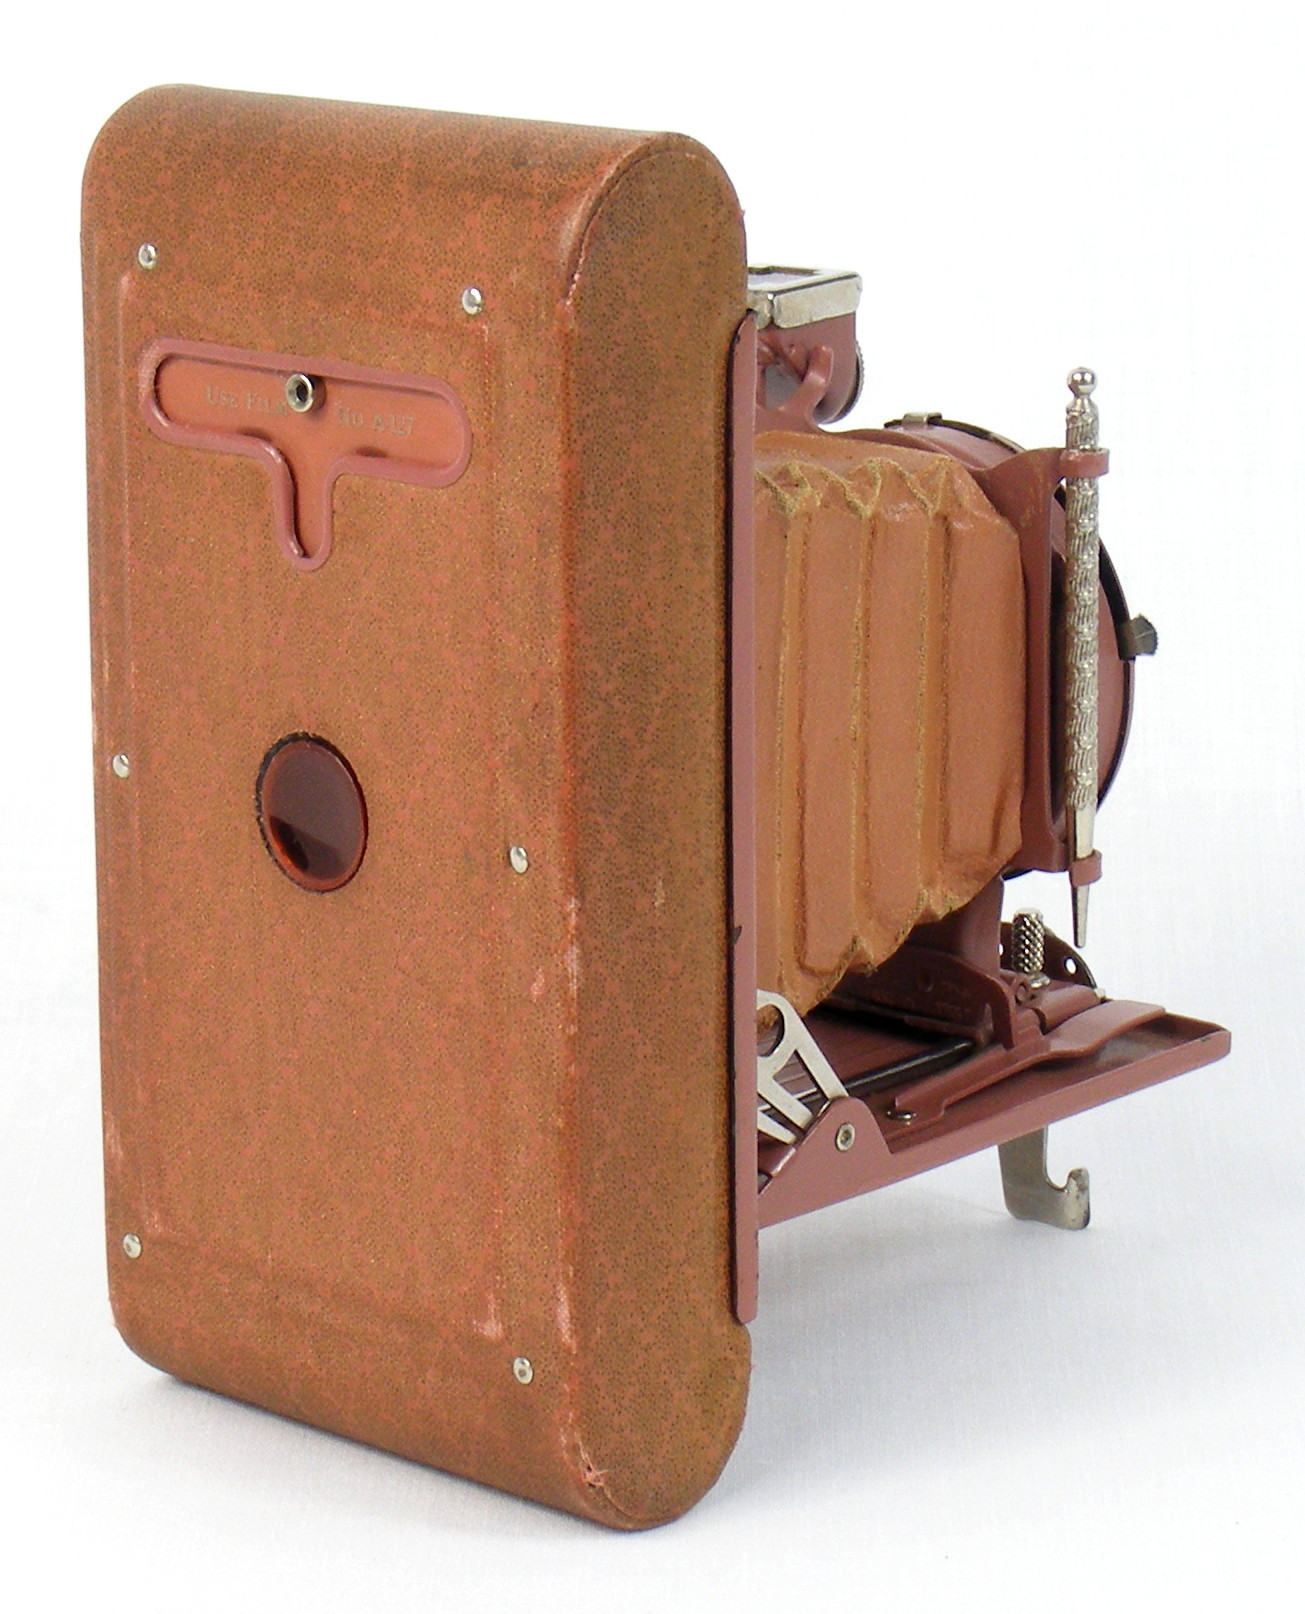 Image of Kodak Petite folding camera in Old Rose (rear view)